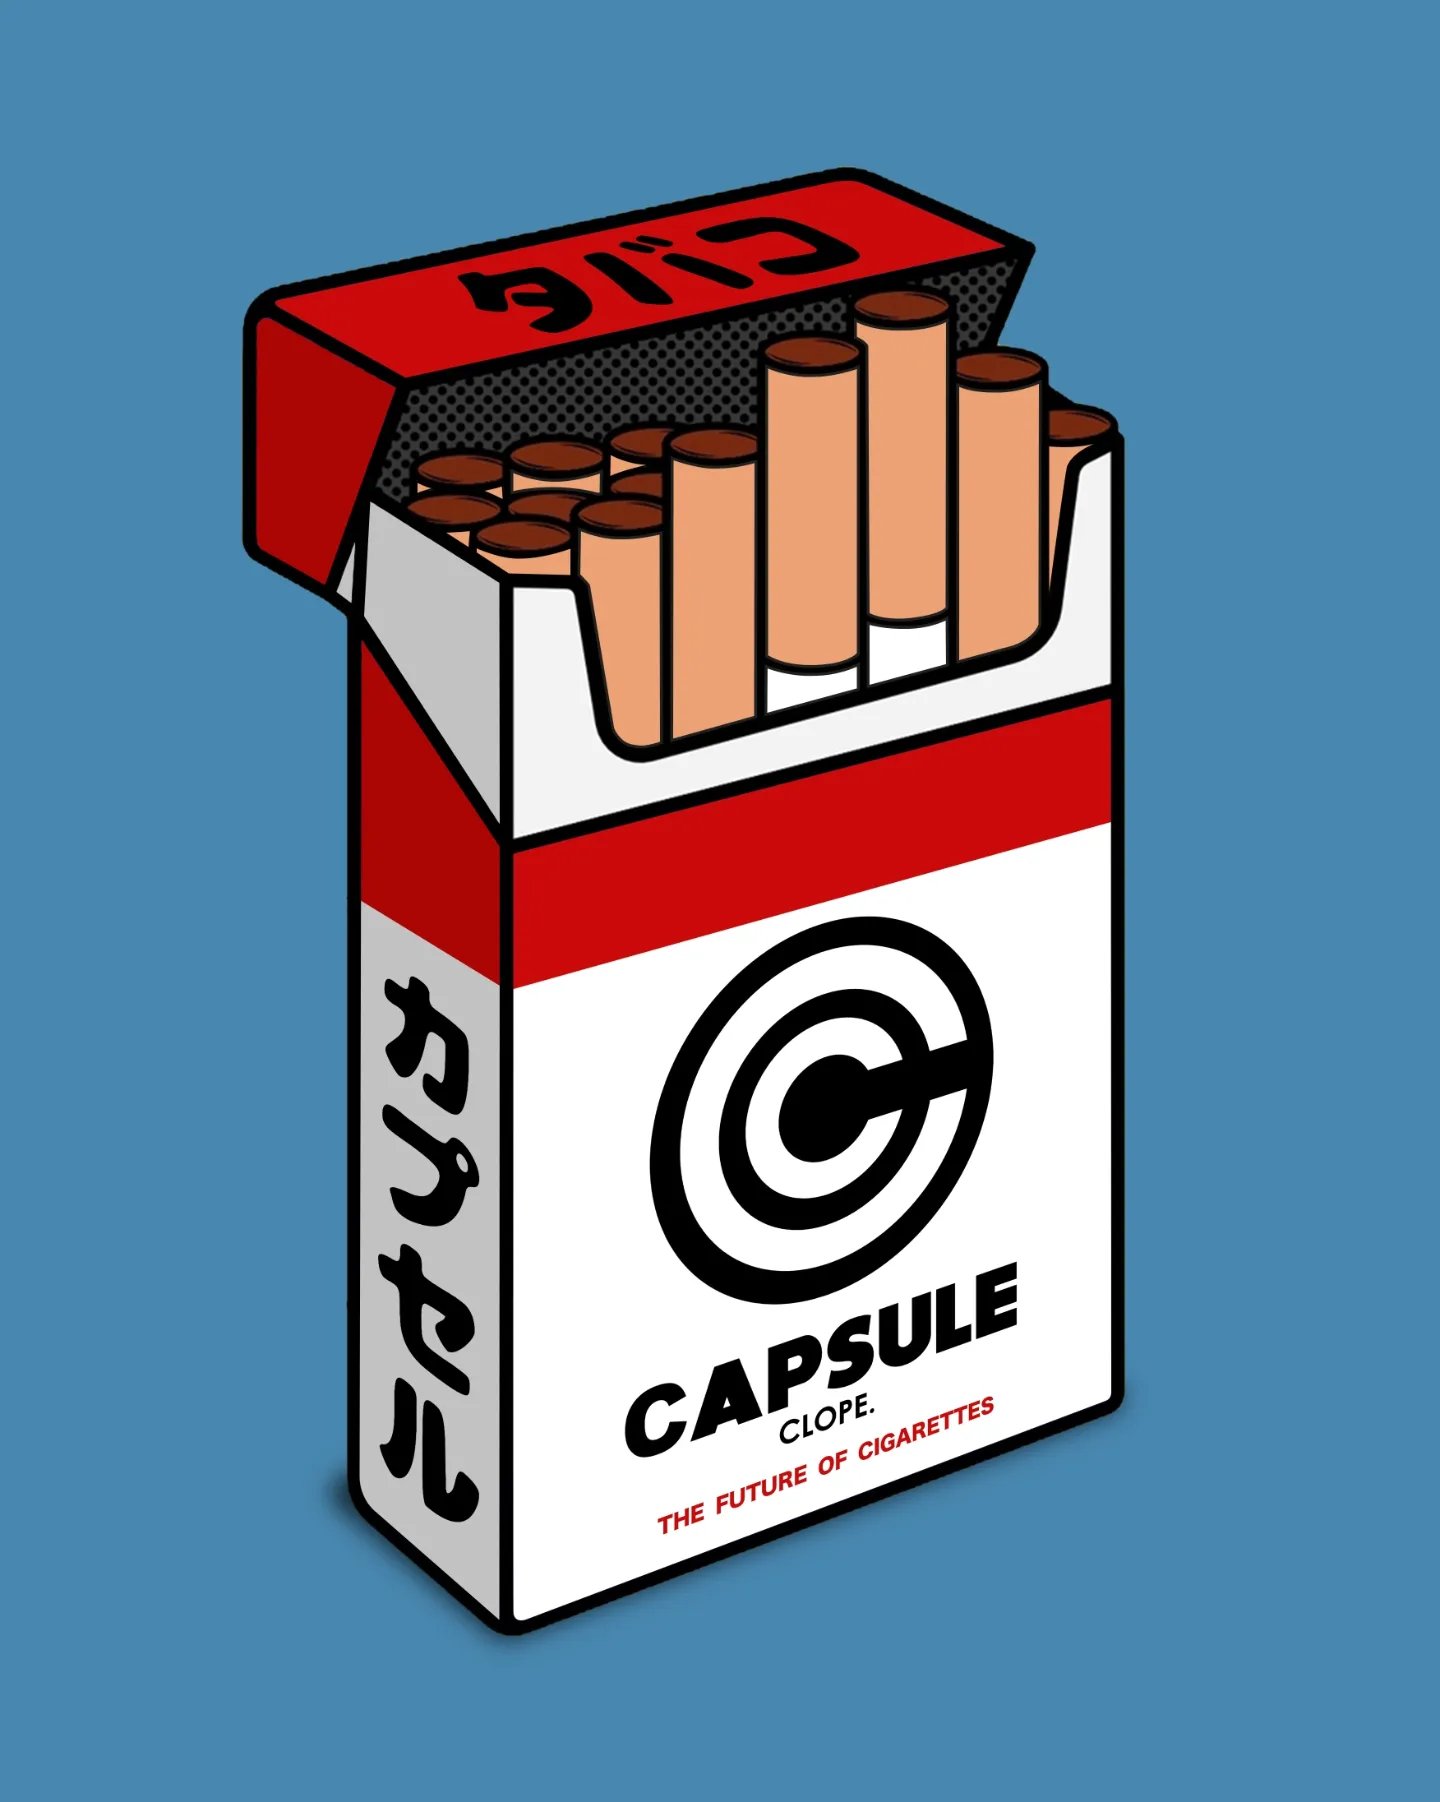 Capsule Clope. Cigarettes